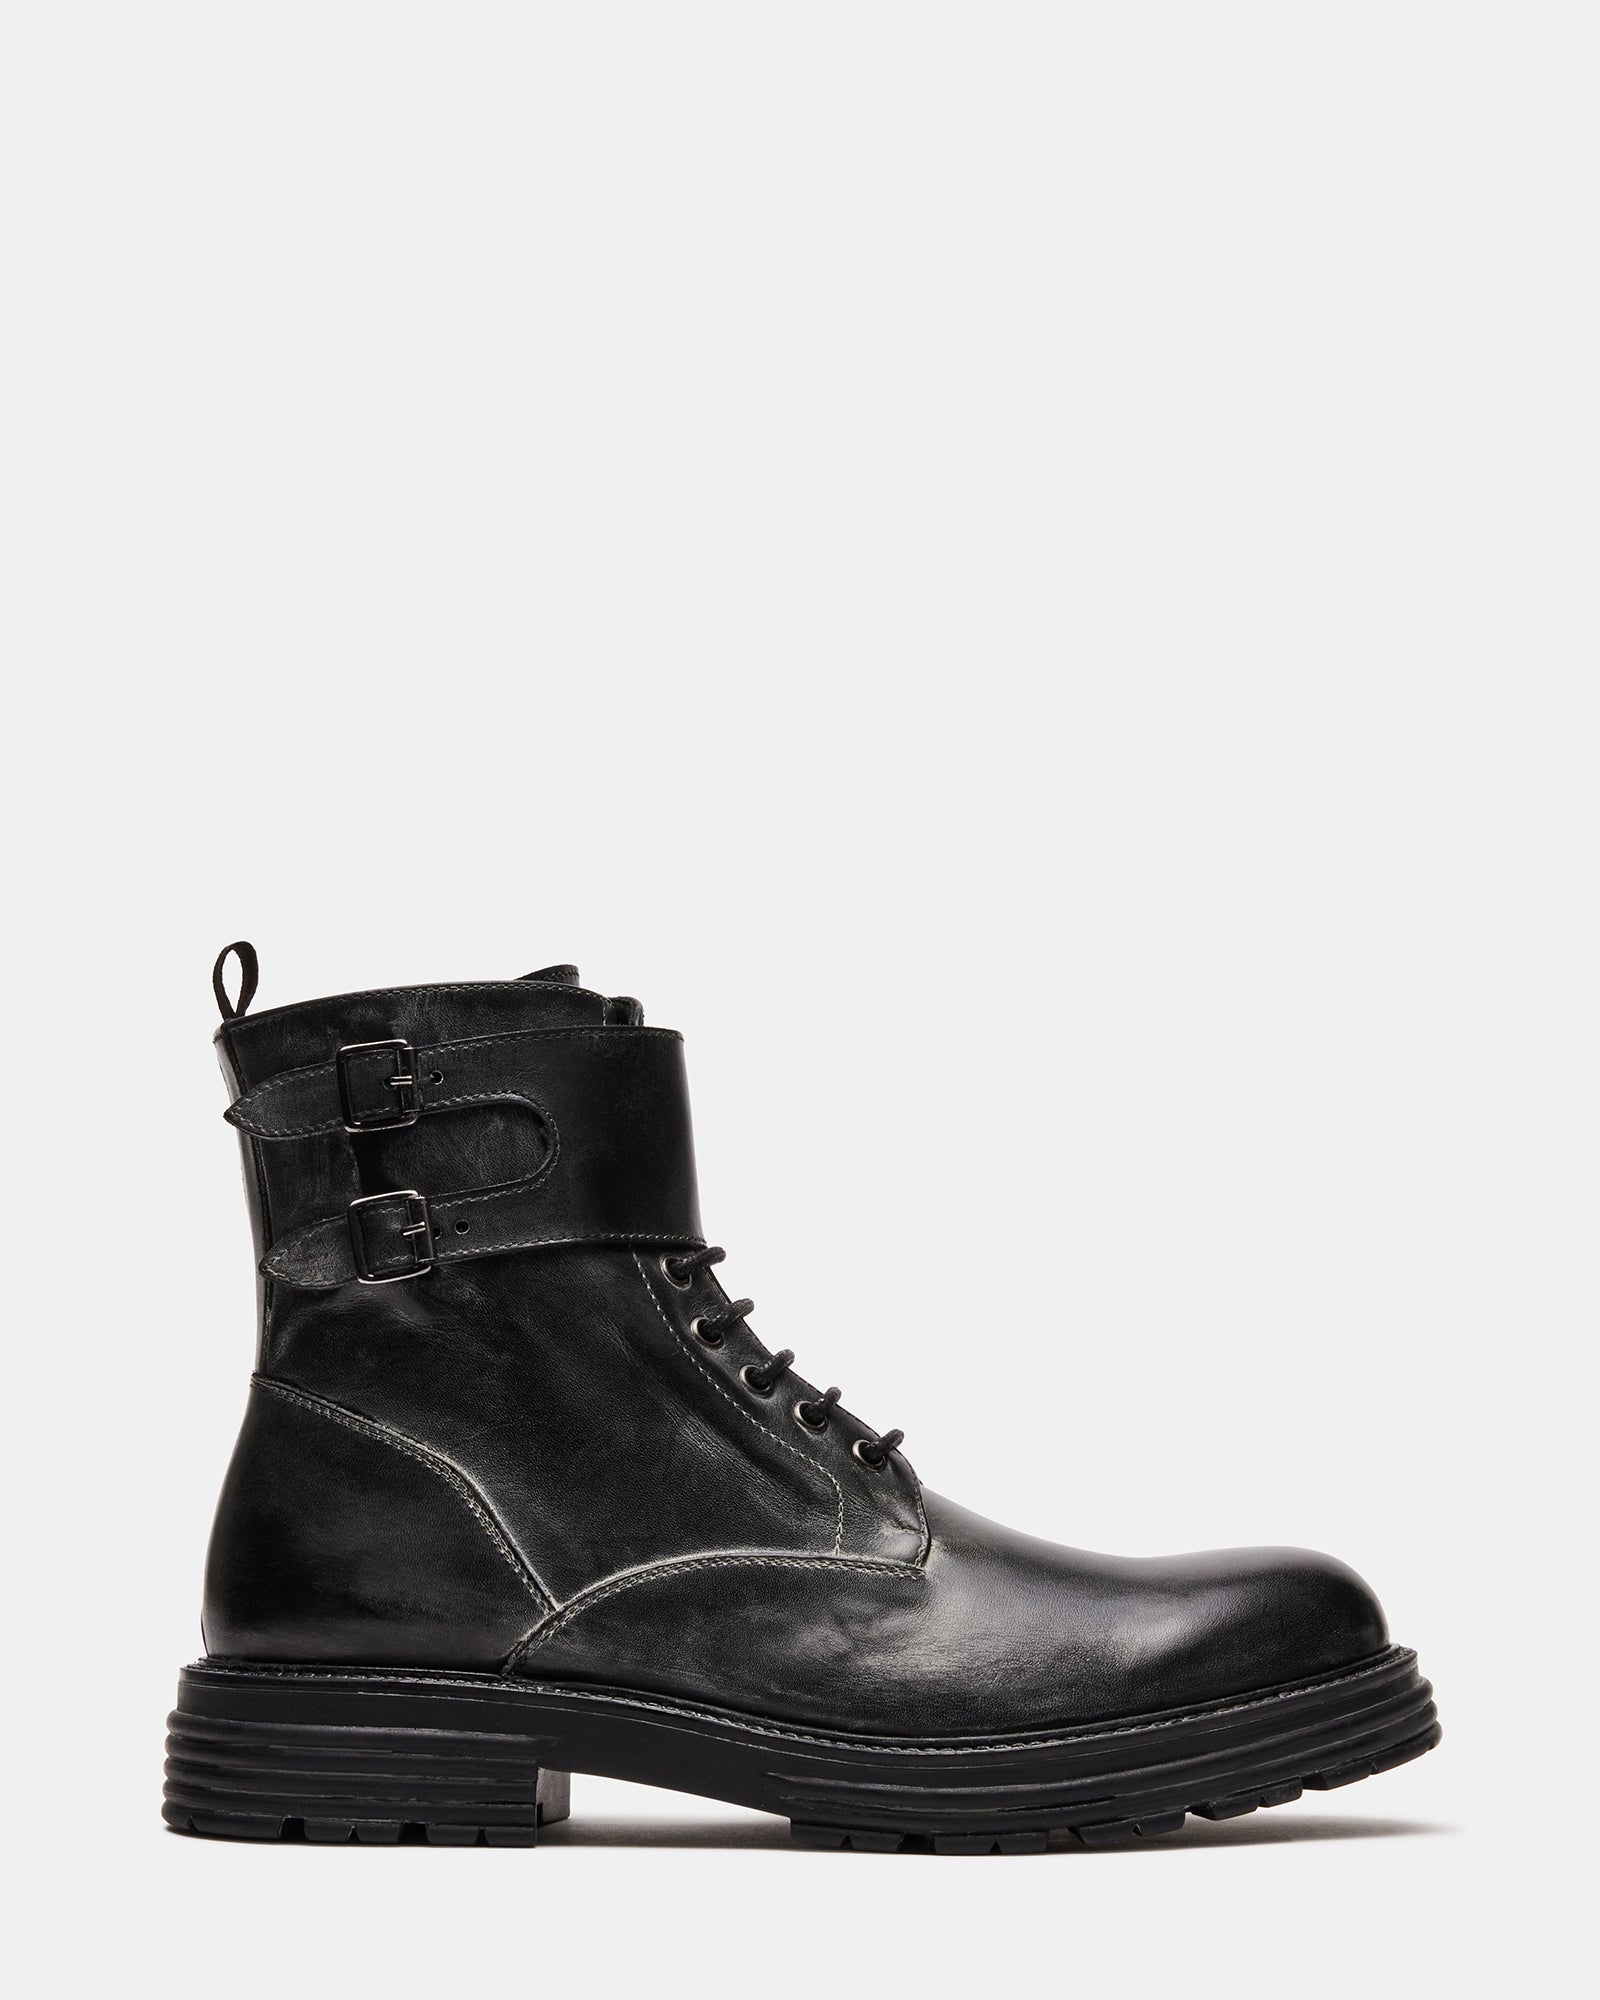 COPA Black Leather Lug Sole Chelsea Ankle Boot | Men's Boots